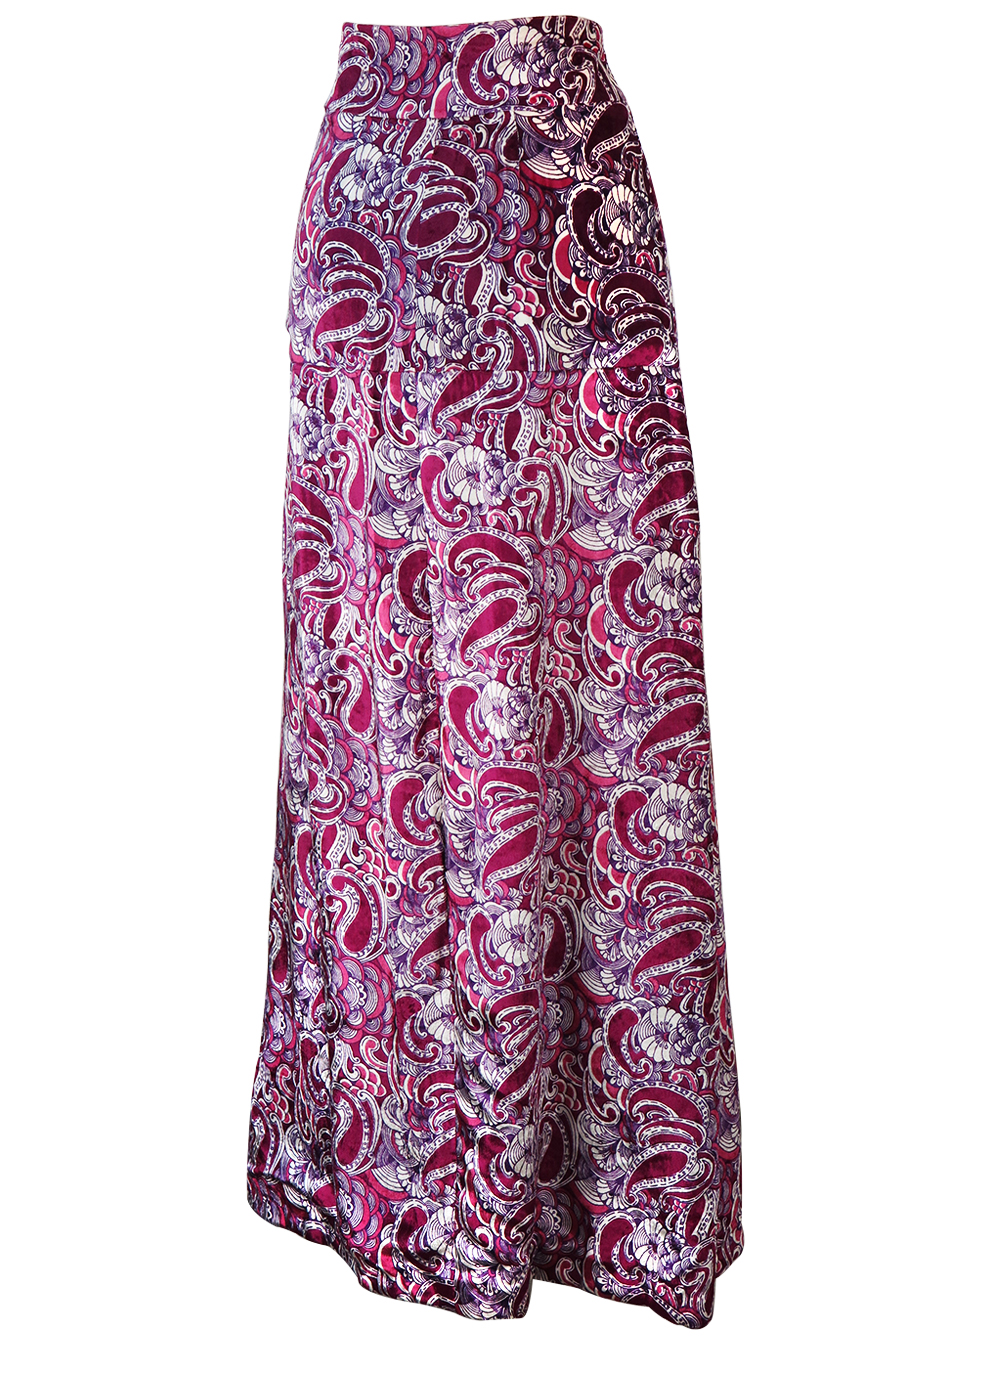 Vintage 70's Velvet Maxi Skirt with Purple & White Paisley Pattern - S ...